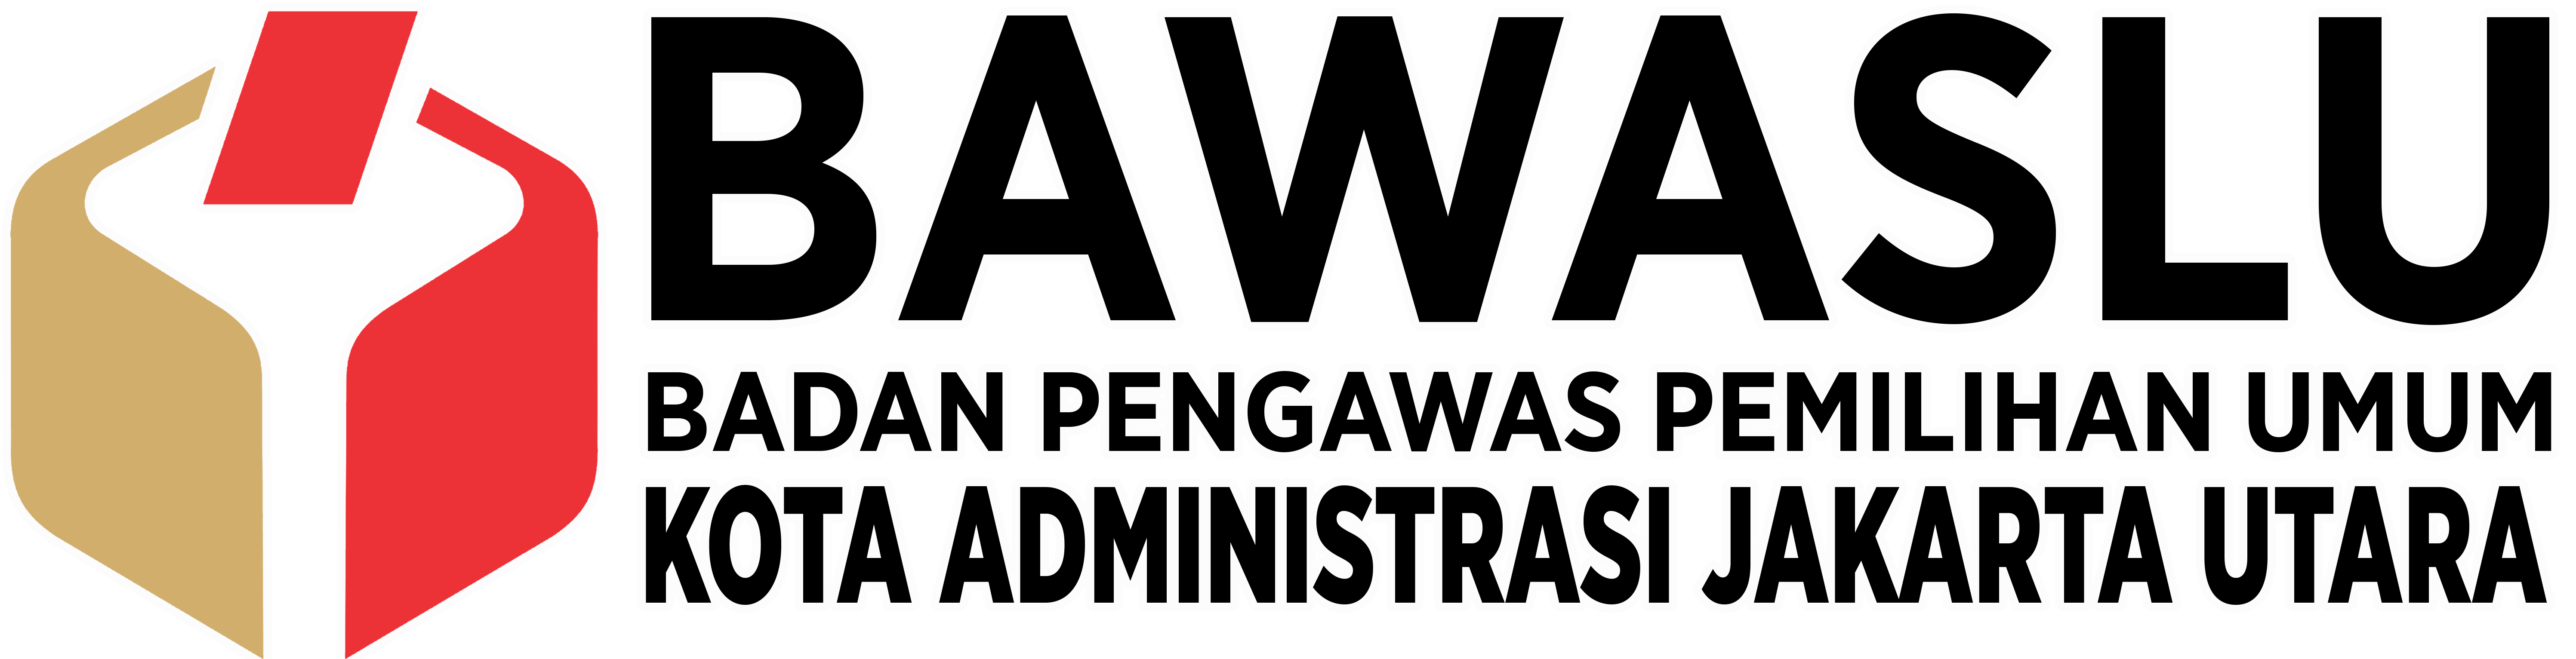 Bawaslu Kota Jakarta Utara logo